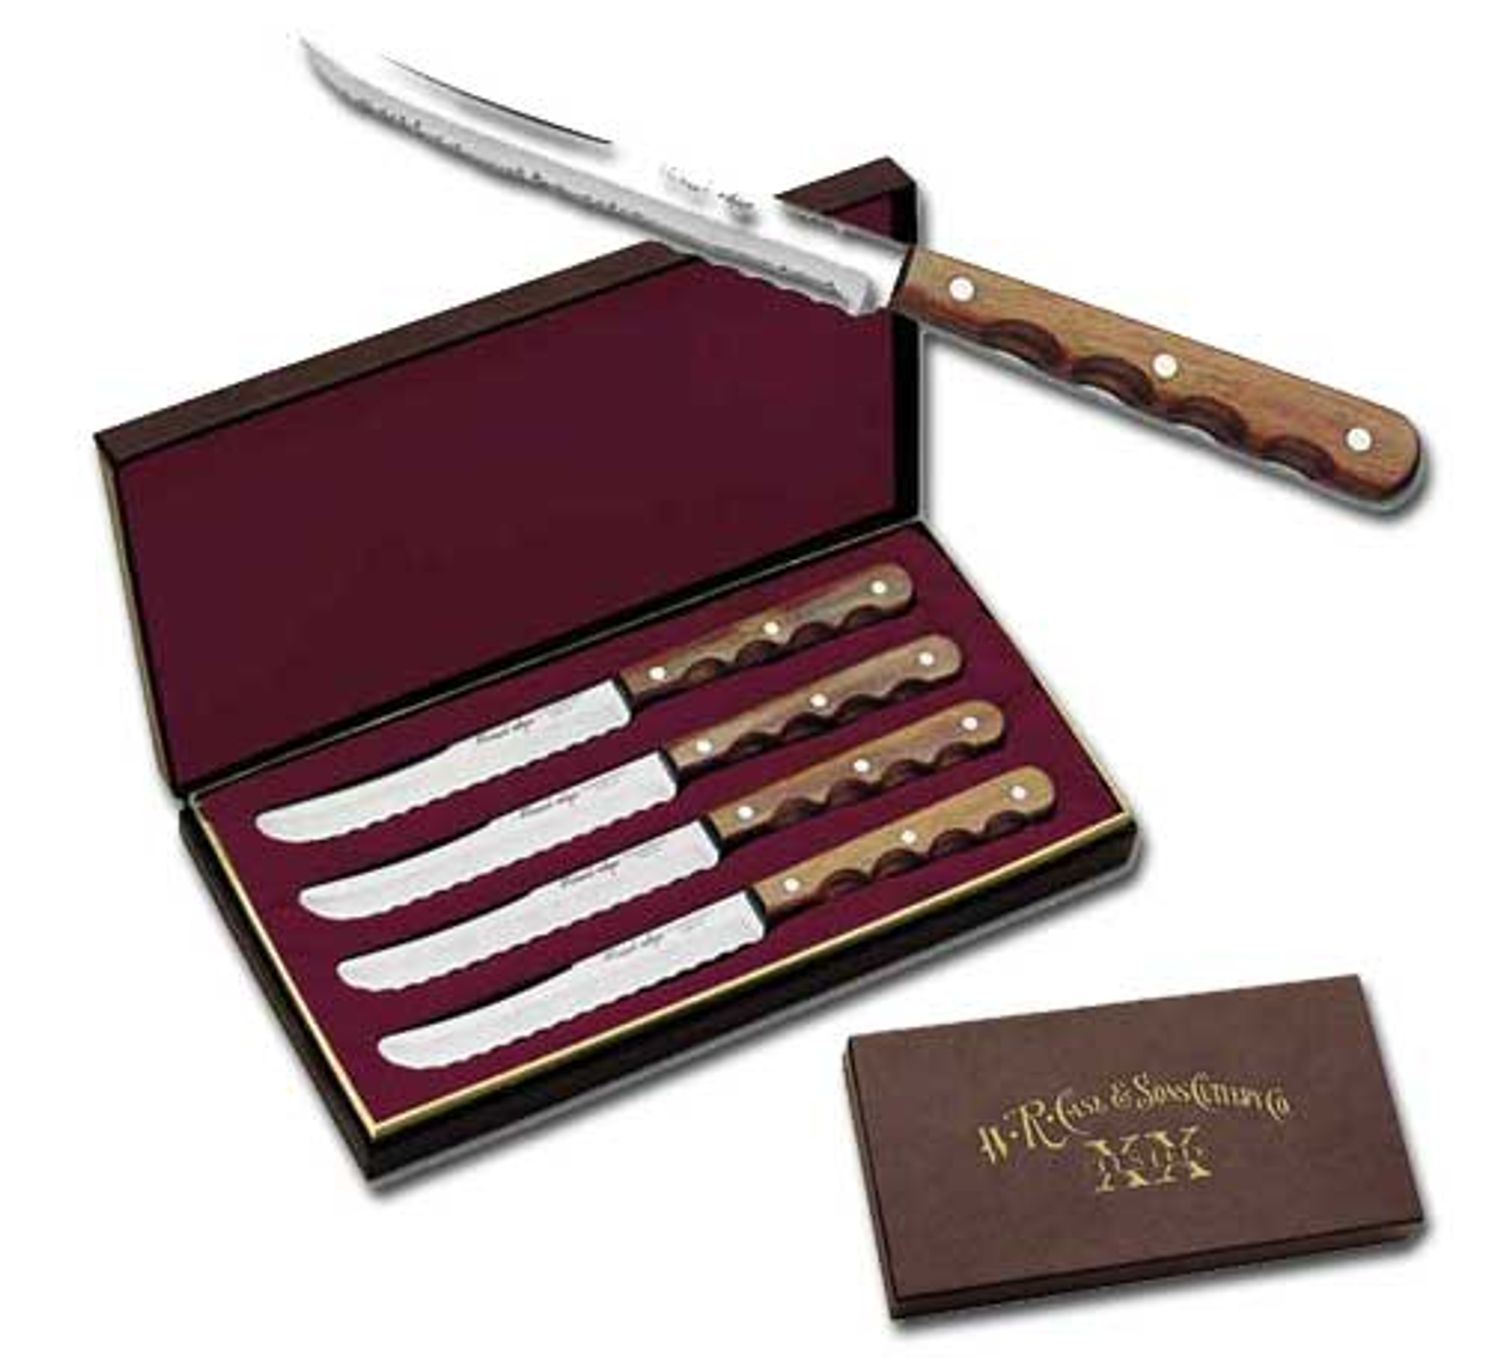 https://pics.knifecenter.com/fit-in/1500x1500/knifecenter/case/images/steak.jpg